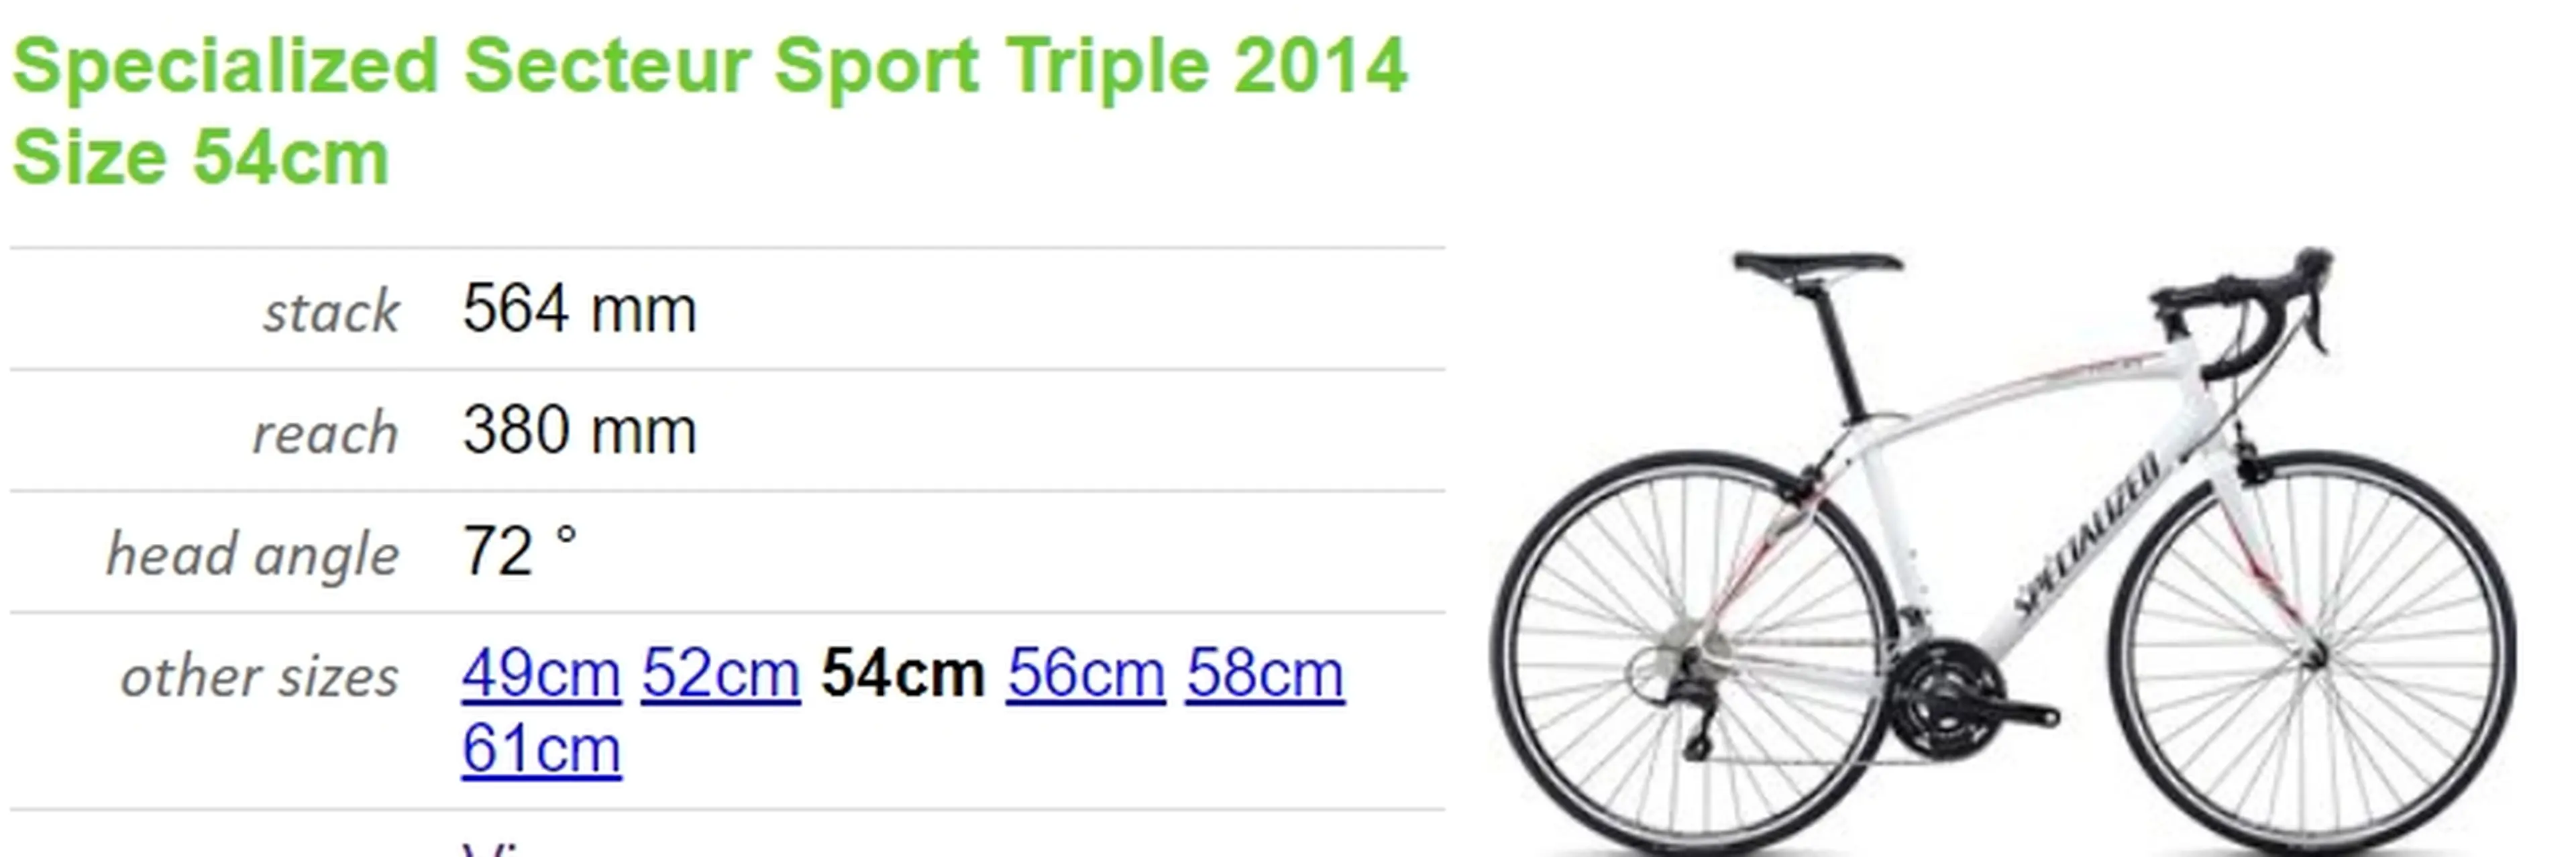 Image Specialized Secteur Sport X3 2014 Road Bike